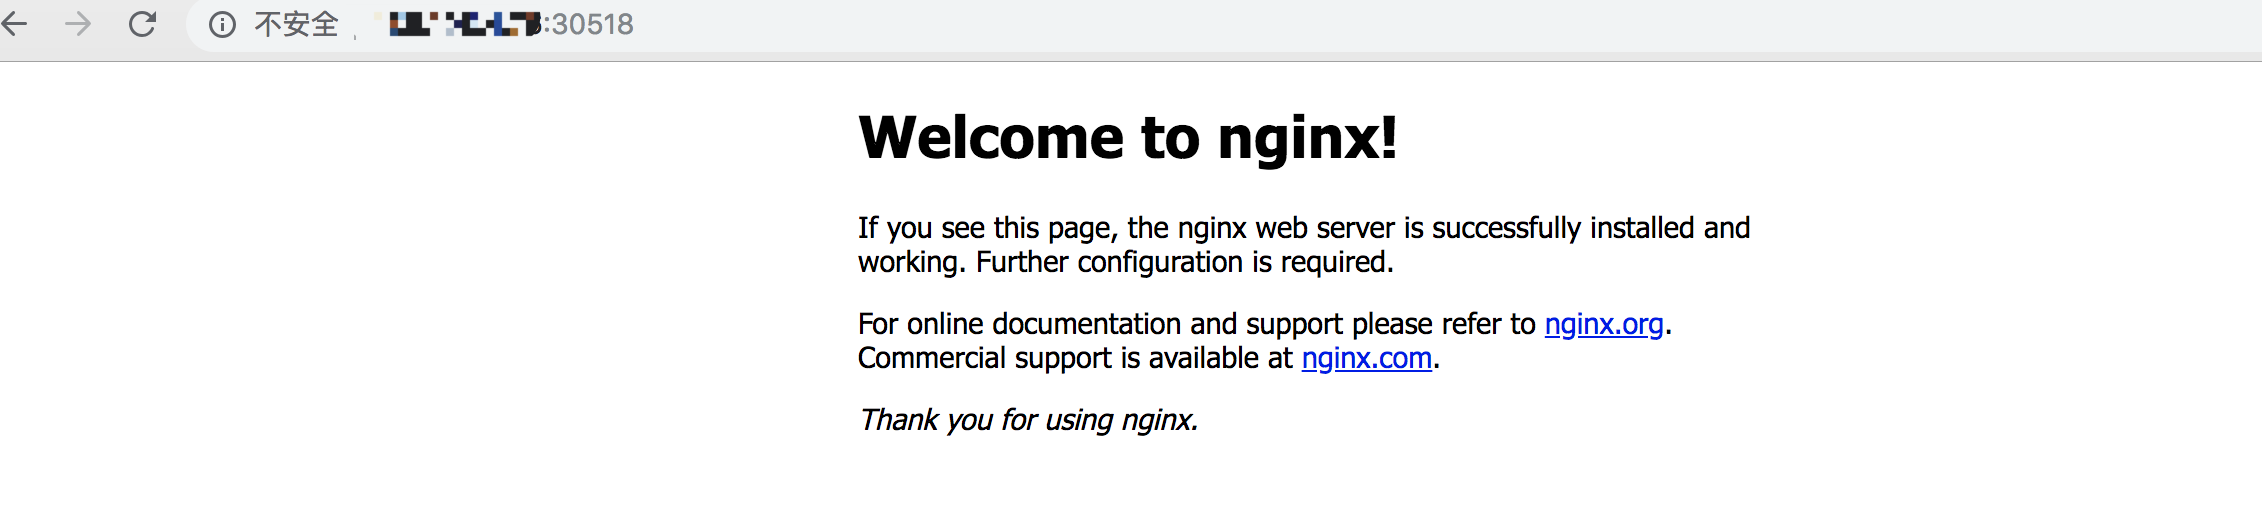 Access the Nginx service